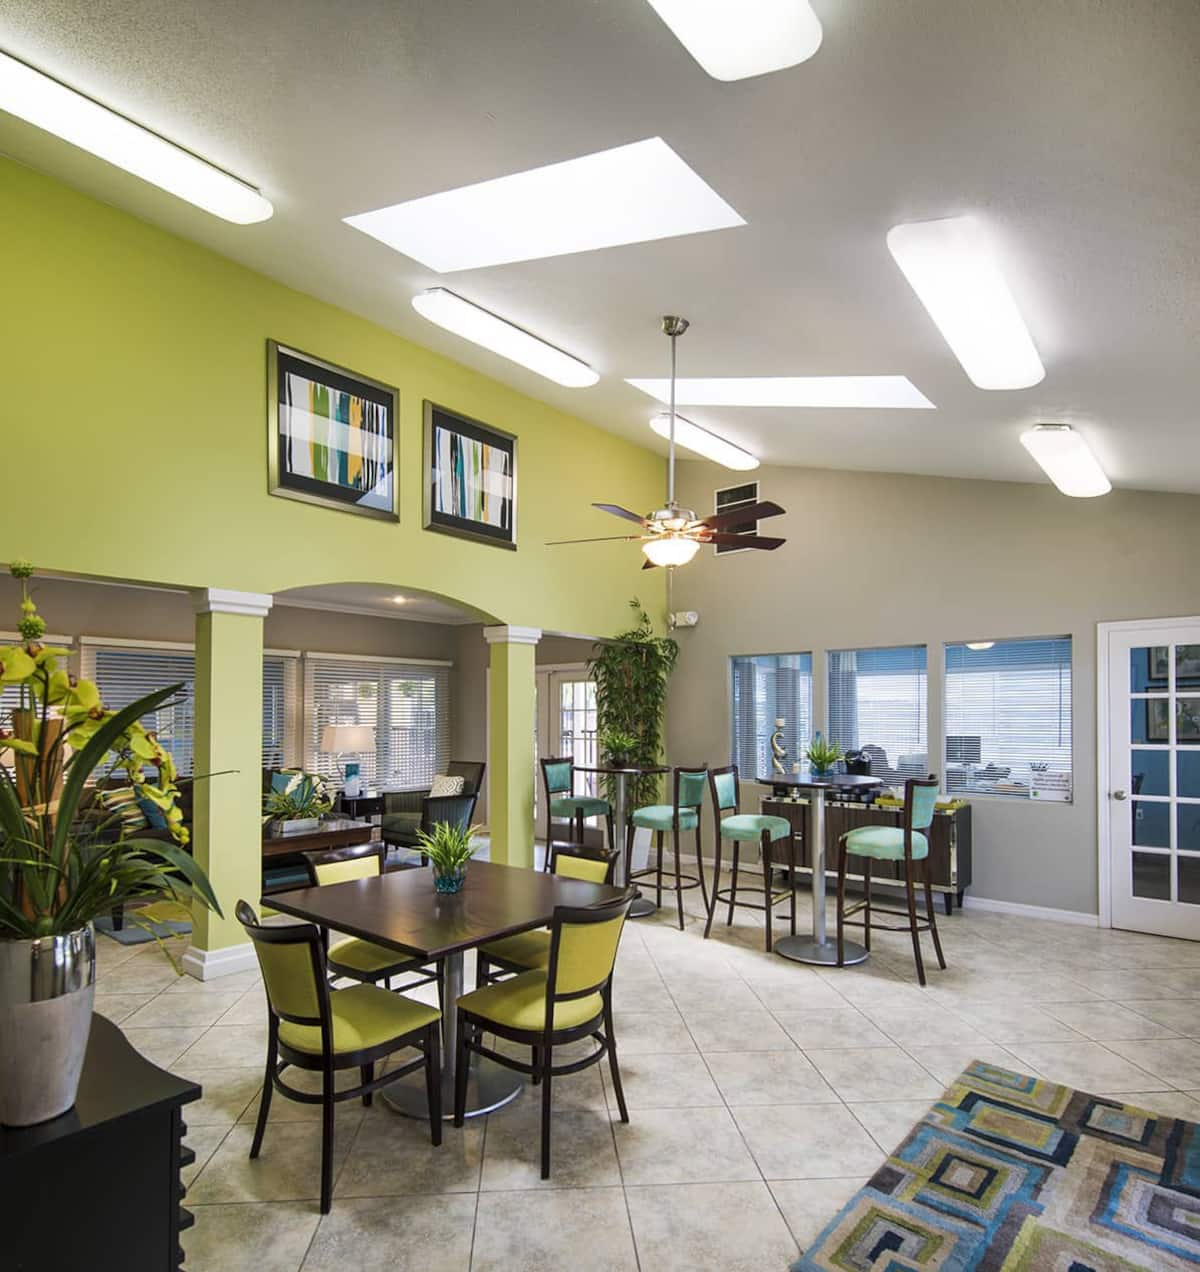 Alternate view of Lotus Landing, an Airbnb-friendly apartment in Altamonte Springs, FL